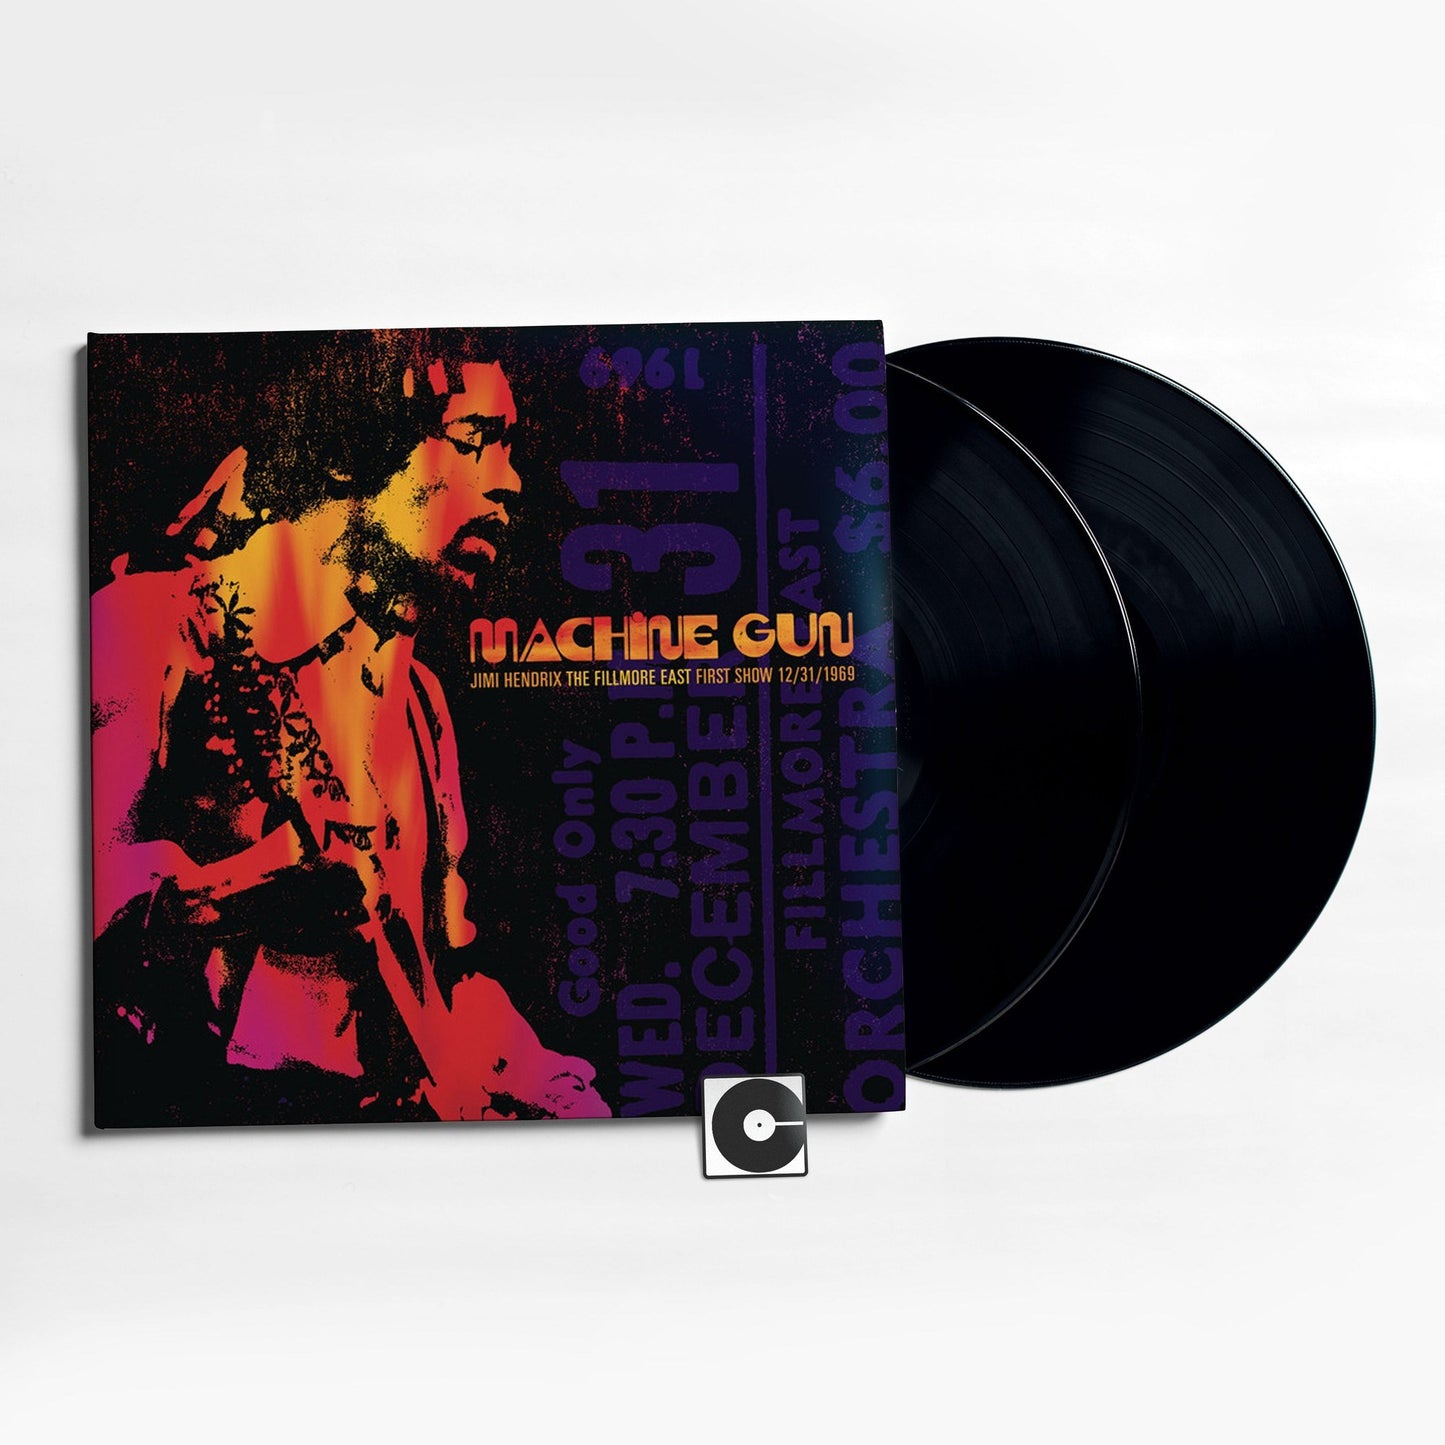 Jimi Hendrix - "Machine Gun"